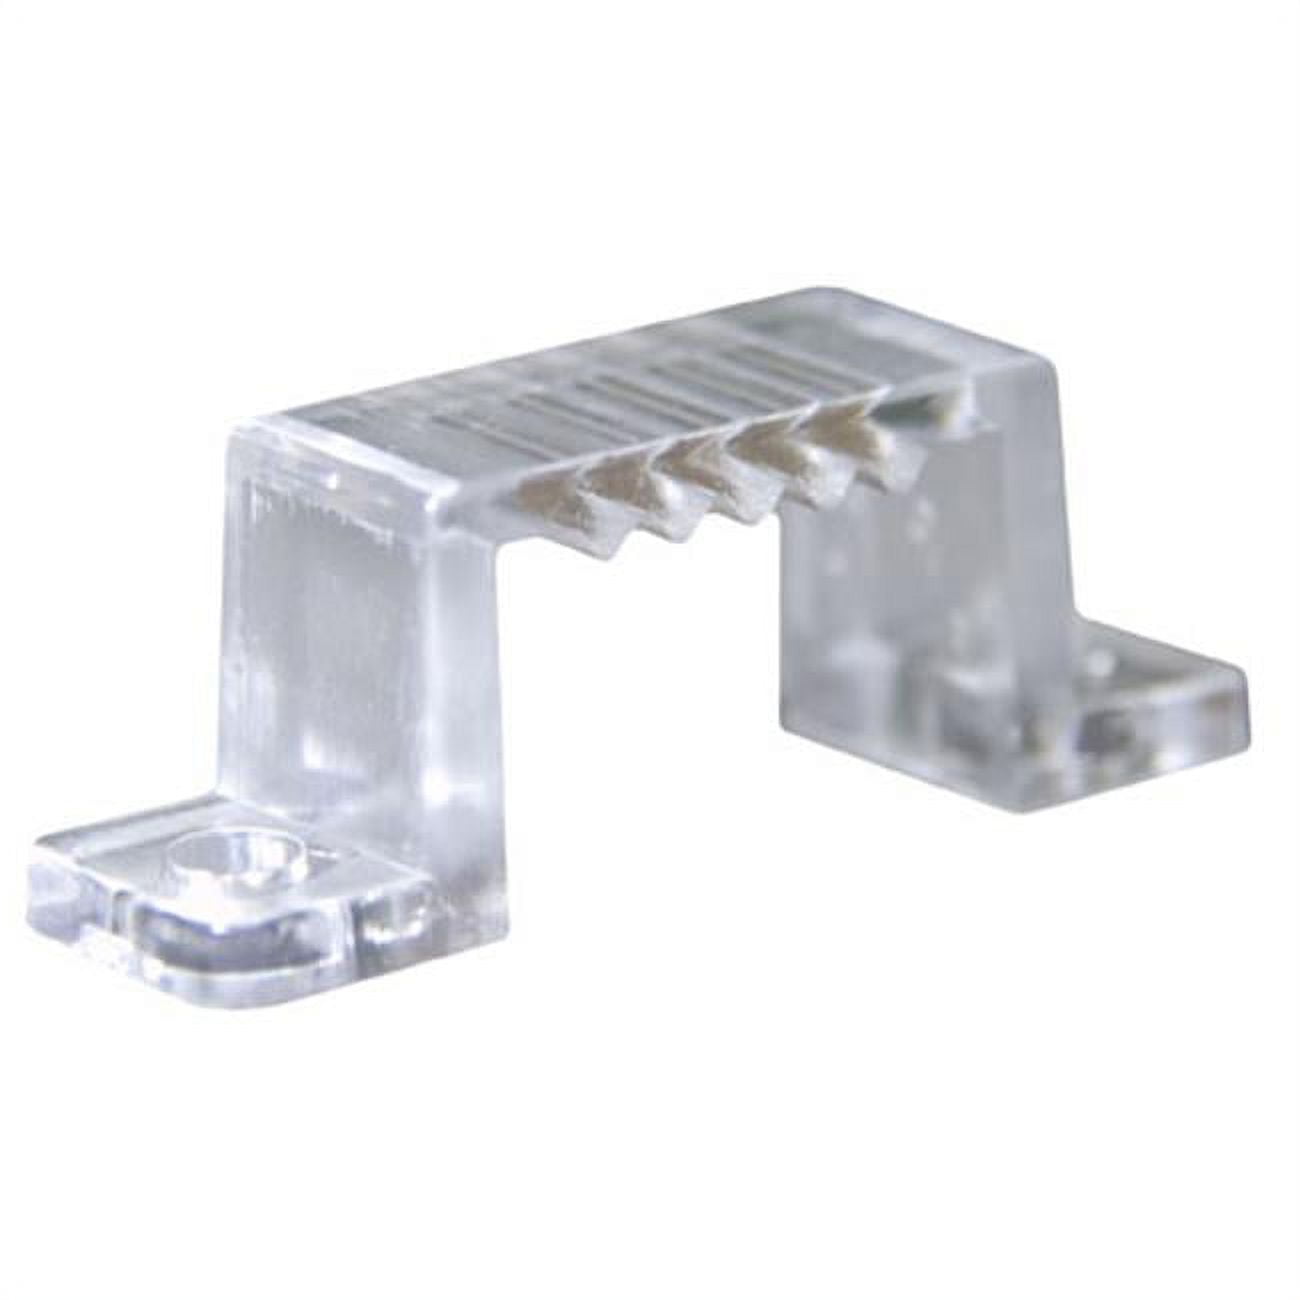 P-led1-clip Plastic Mounting Support Clip For Lv-led1 & Lv-led2 Rope Light